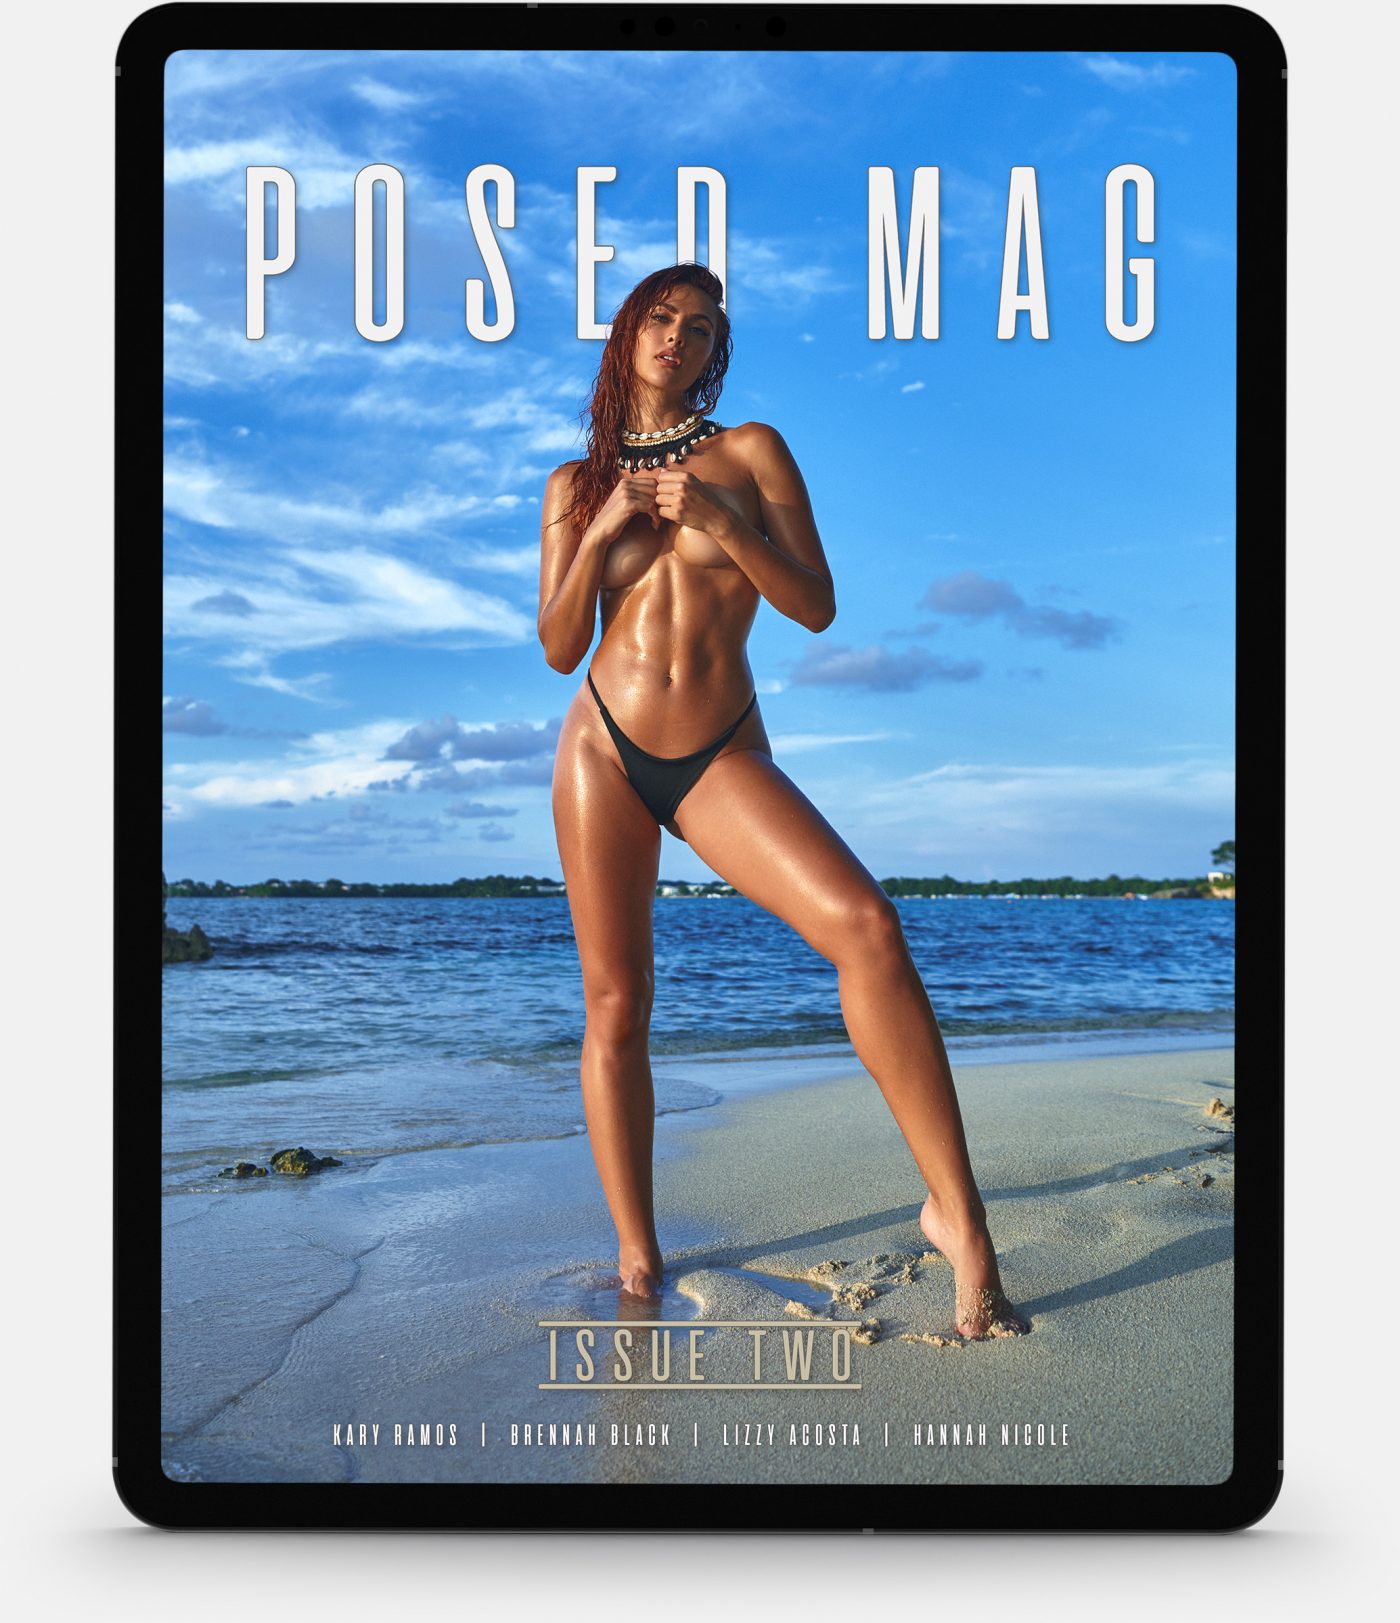 Kary Ramos model posing nude for POSED MAG digital magazine